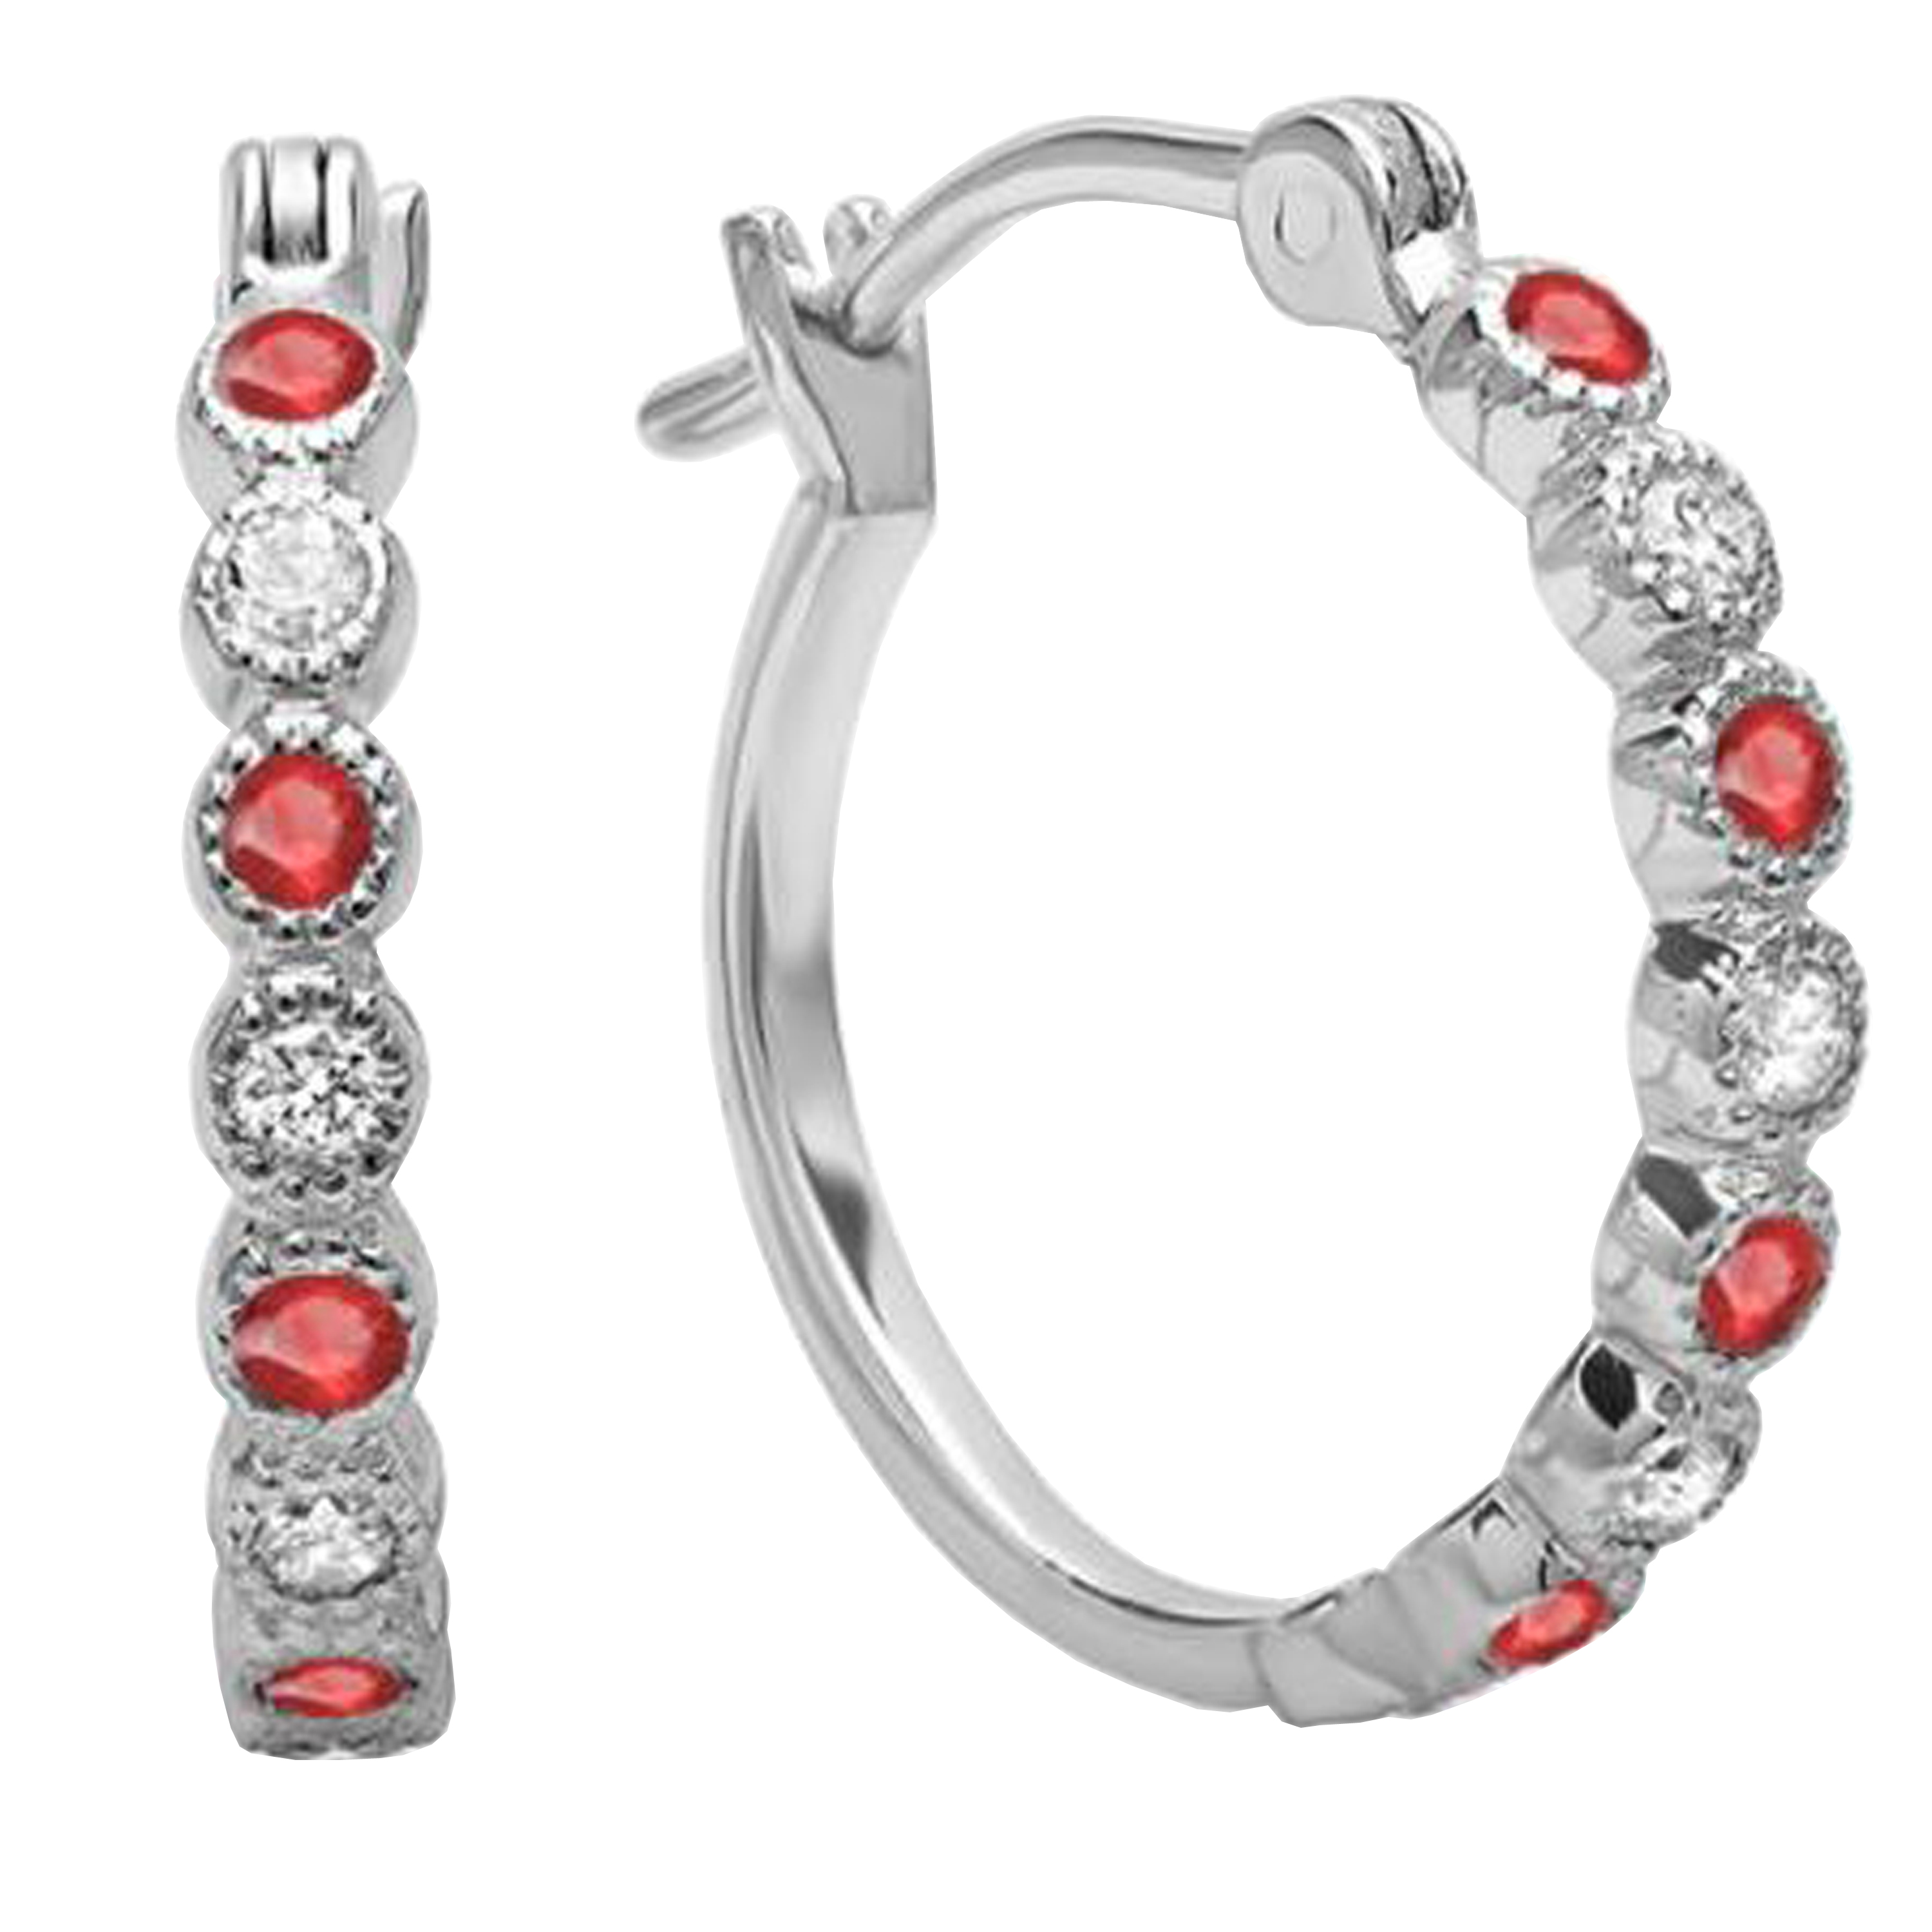 DazzlingRock 0.25 Carat (ctw) 10K White Gold Round White Diamond & Red Ruby Ladies Fine Dainty Hoop Earrings 1/4 CT